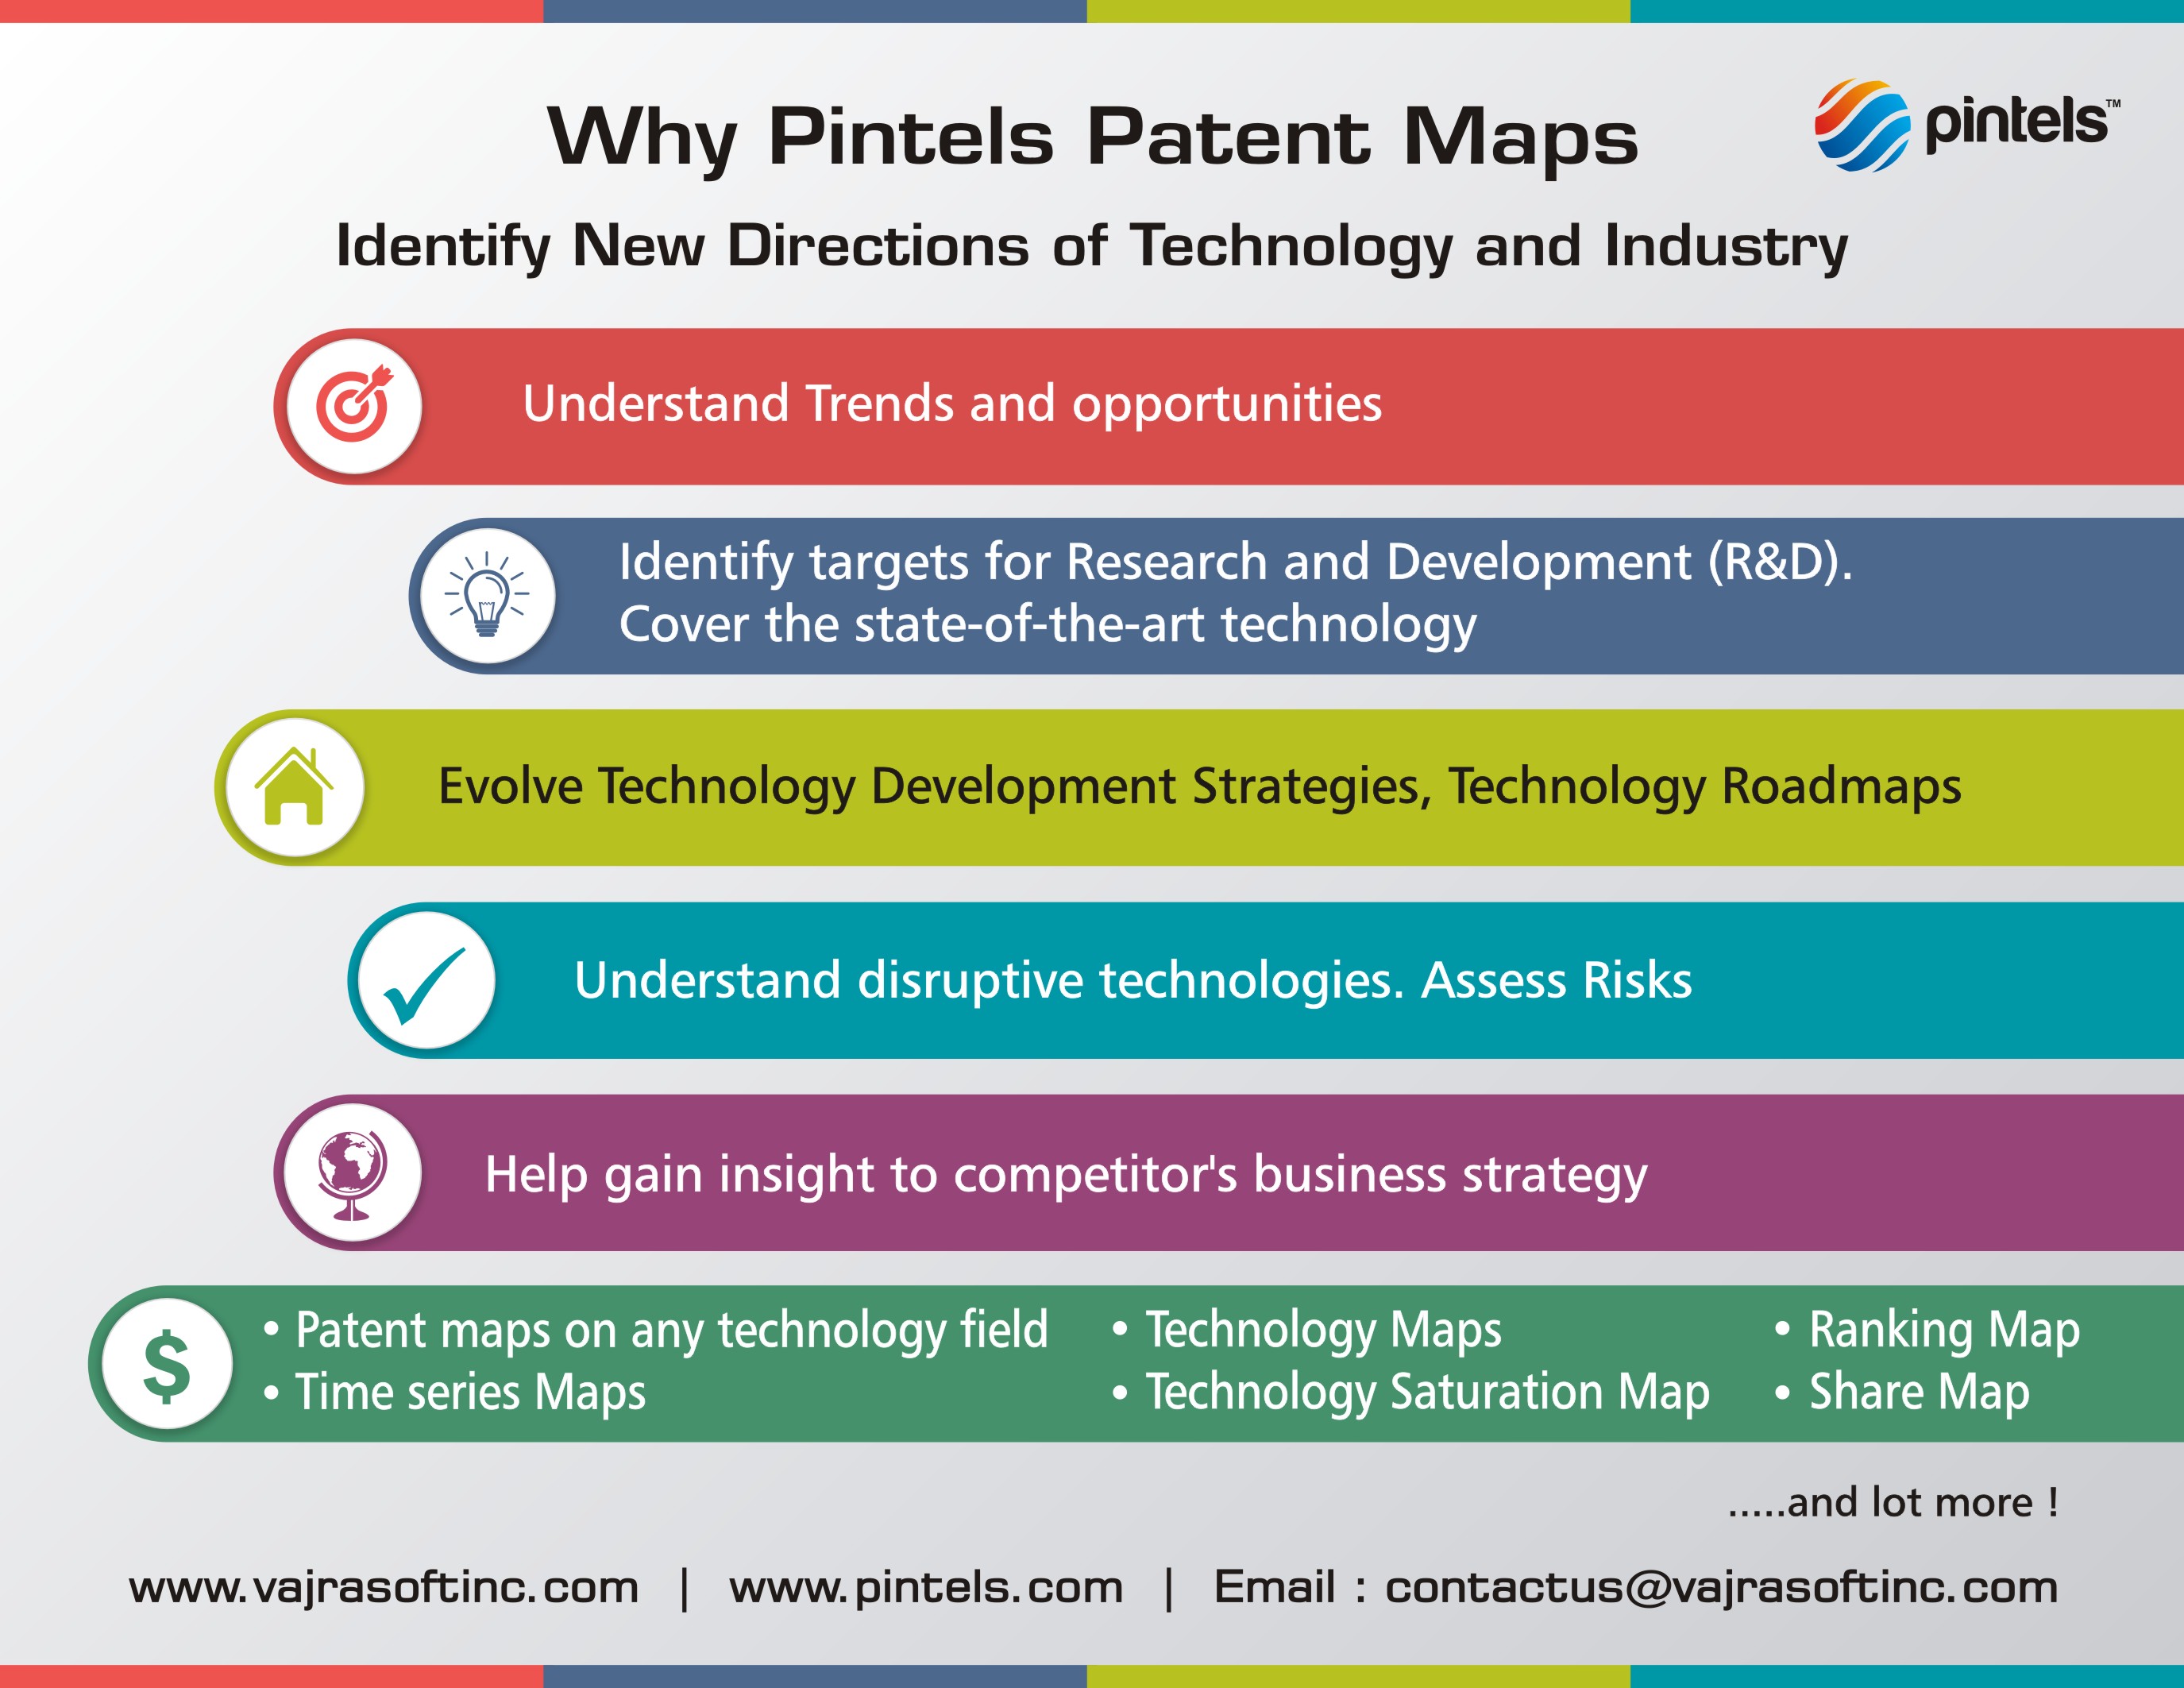 Pintels Patent Maps infographic